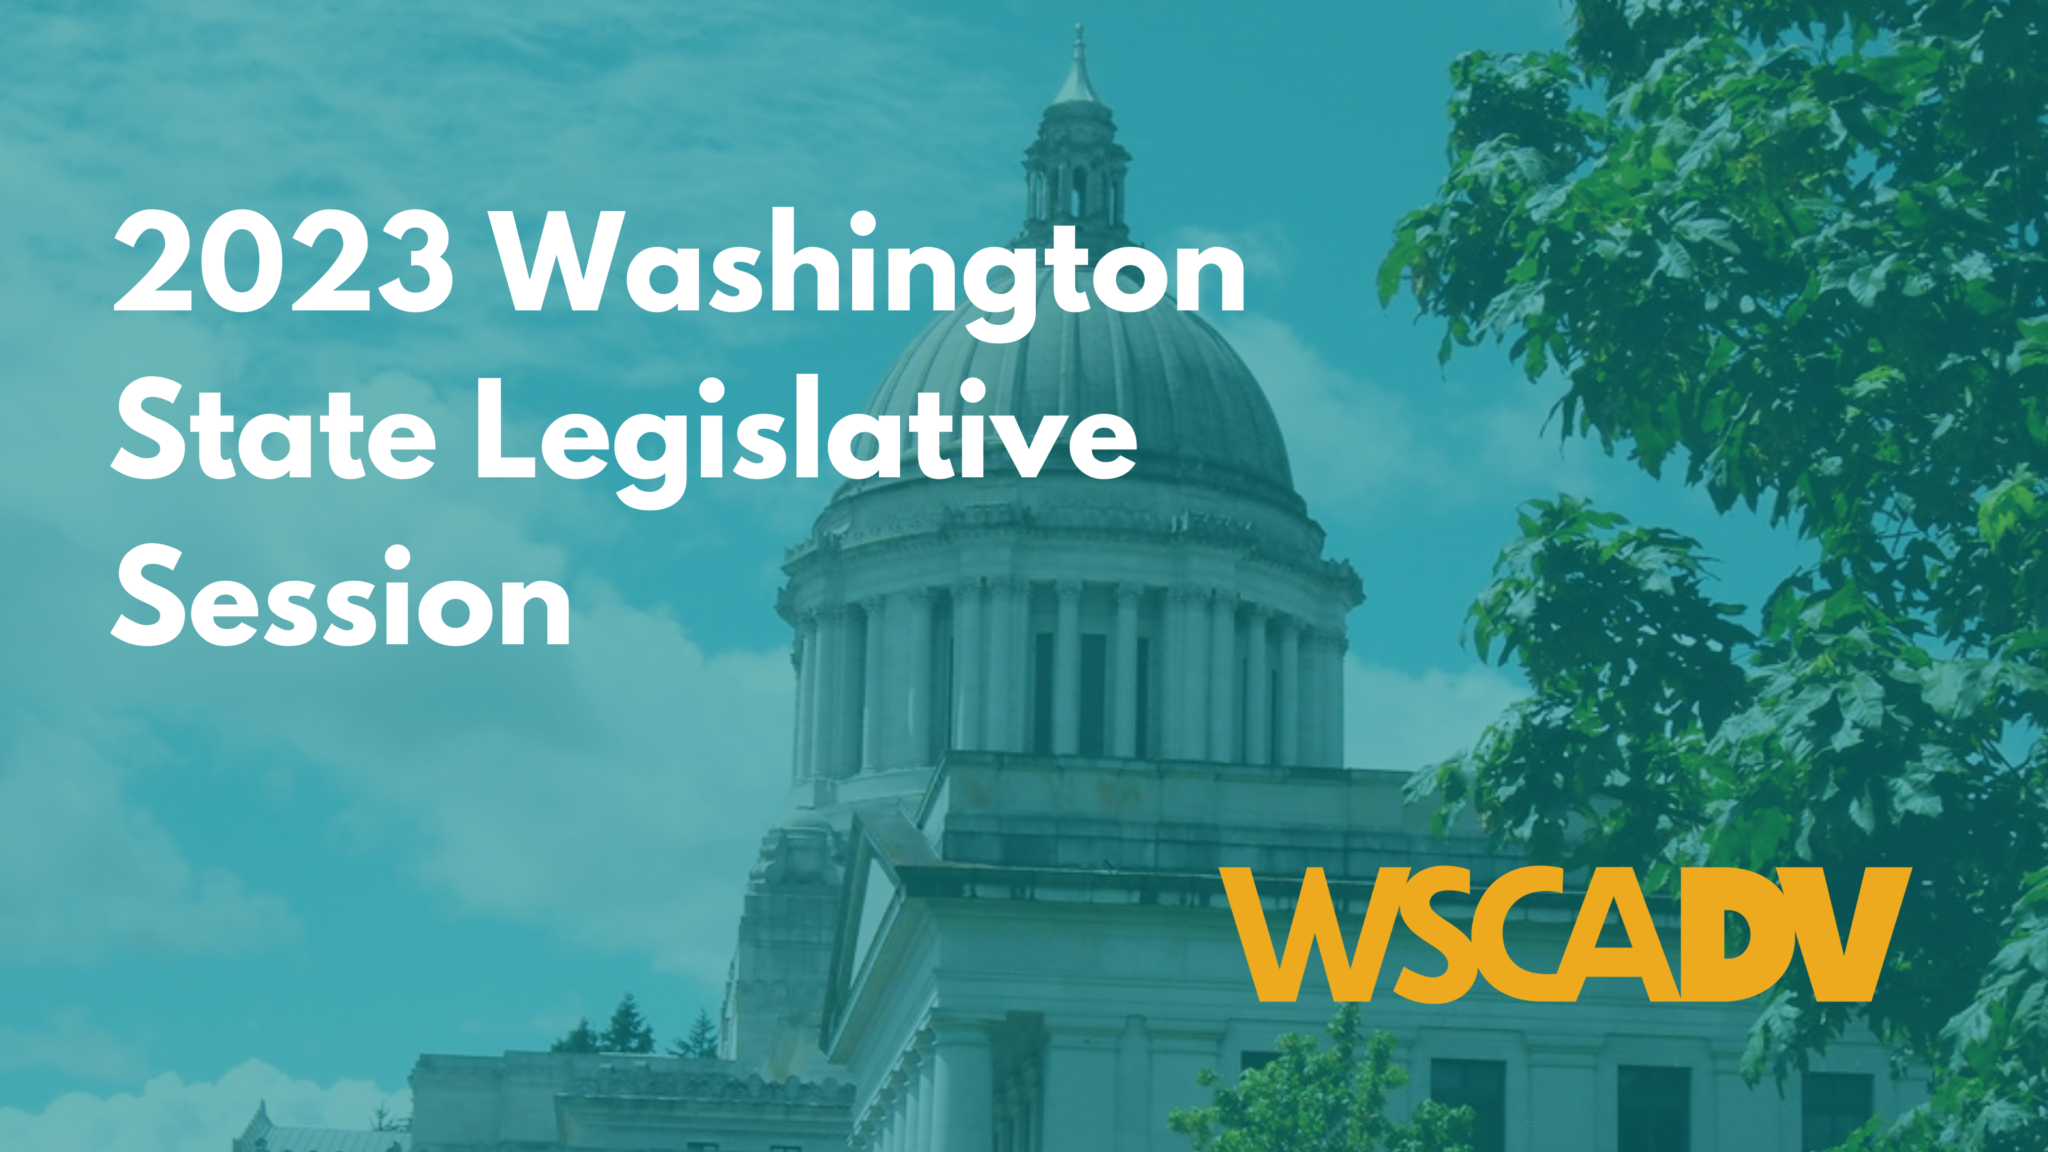 2023 Washington State Legislative Session Graphic Newsletter 3840 × 2160 Px 2048x1152 